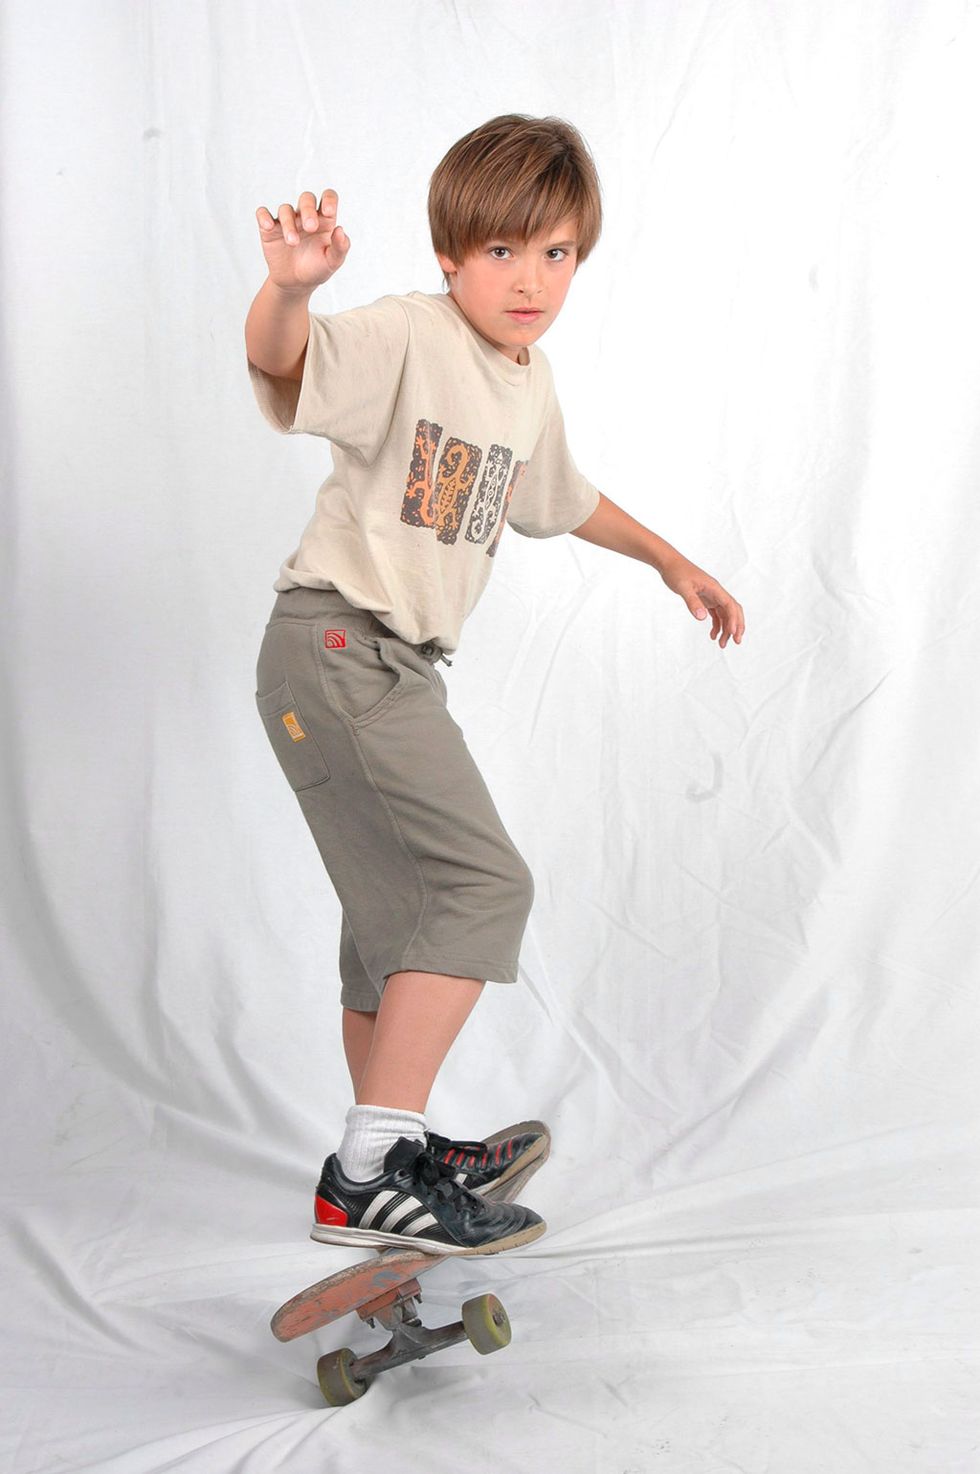 White, Footwear, Cool, Recreation, Sports equipment, Skateboarder, Skateboard, Child, Skateboarding Equipment, Skateboarding, 